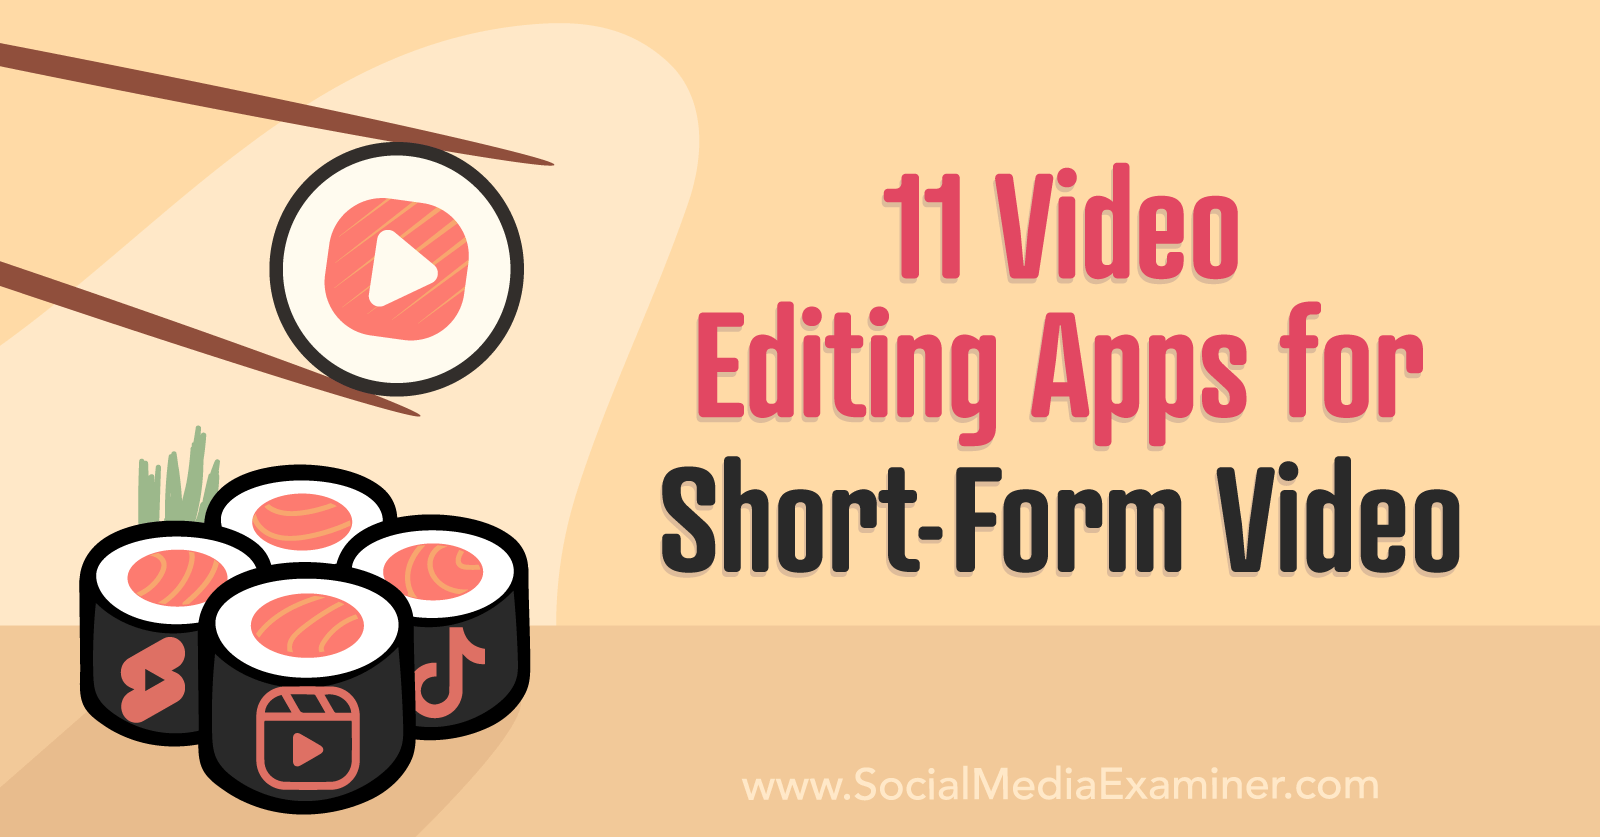 11 Video Editing Apps for Short-Form Video by Social Media Examiner